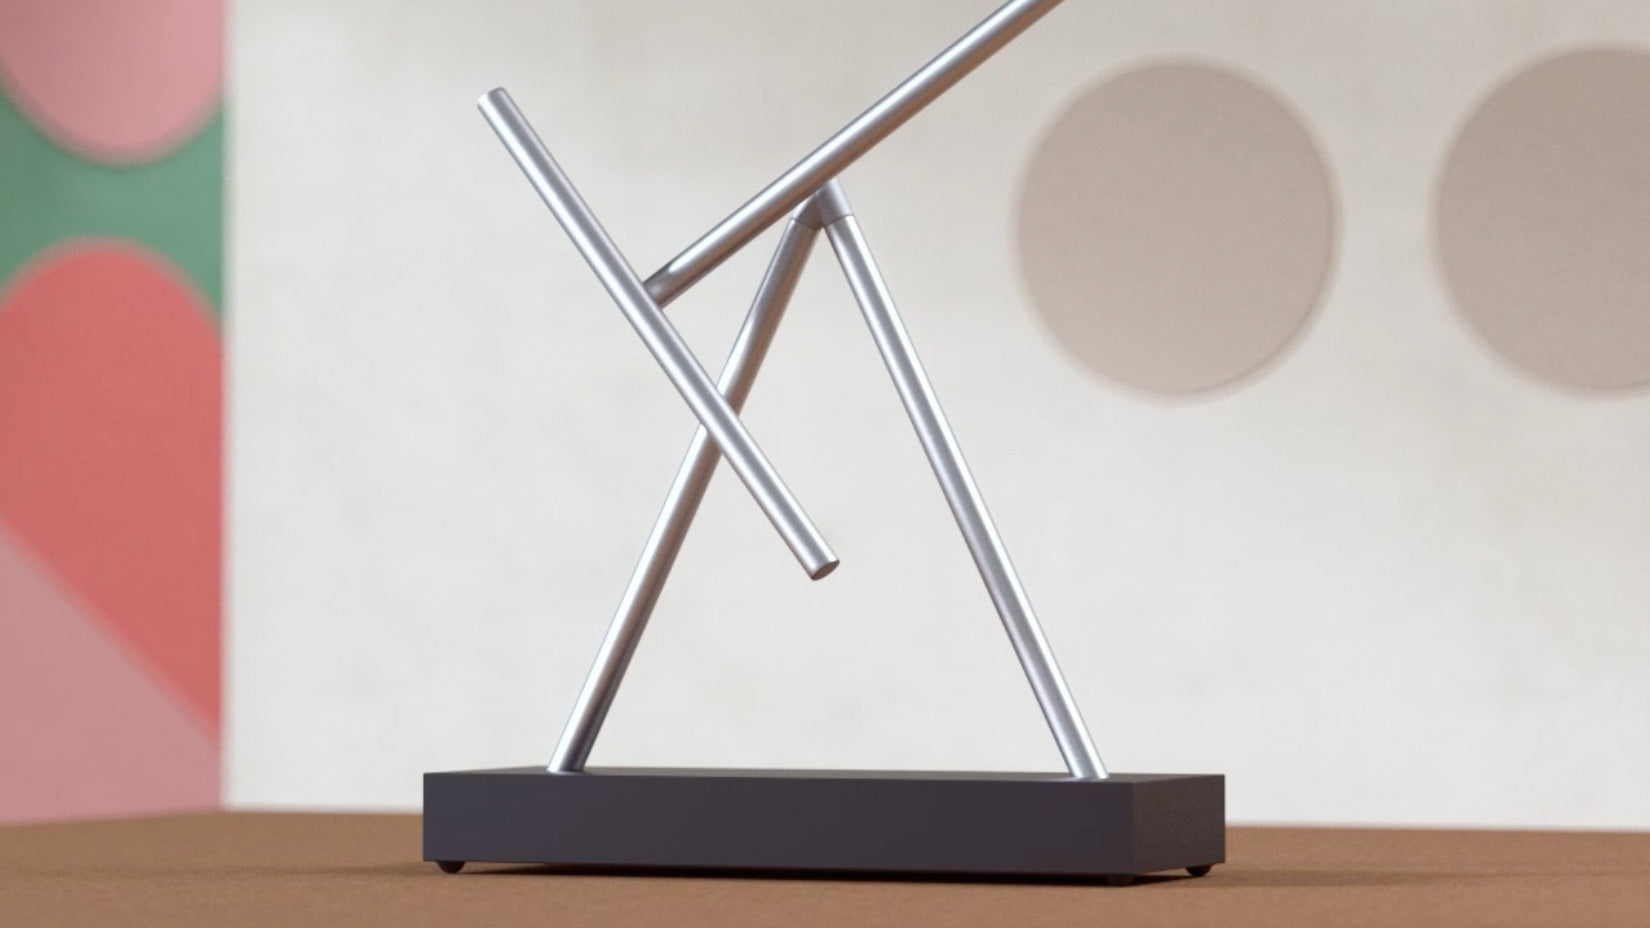 Swinging Sticks Desk Sculpture - Art of Play